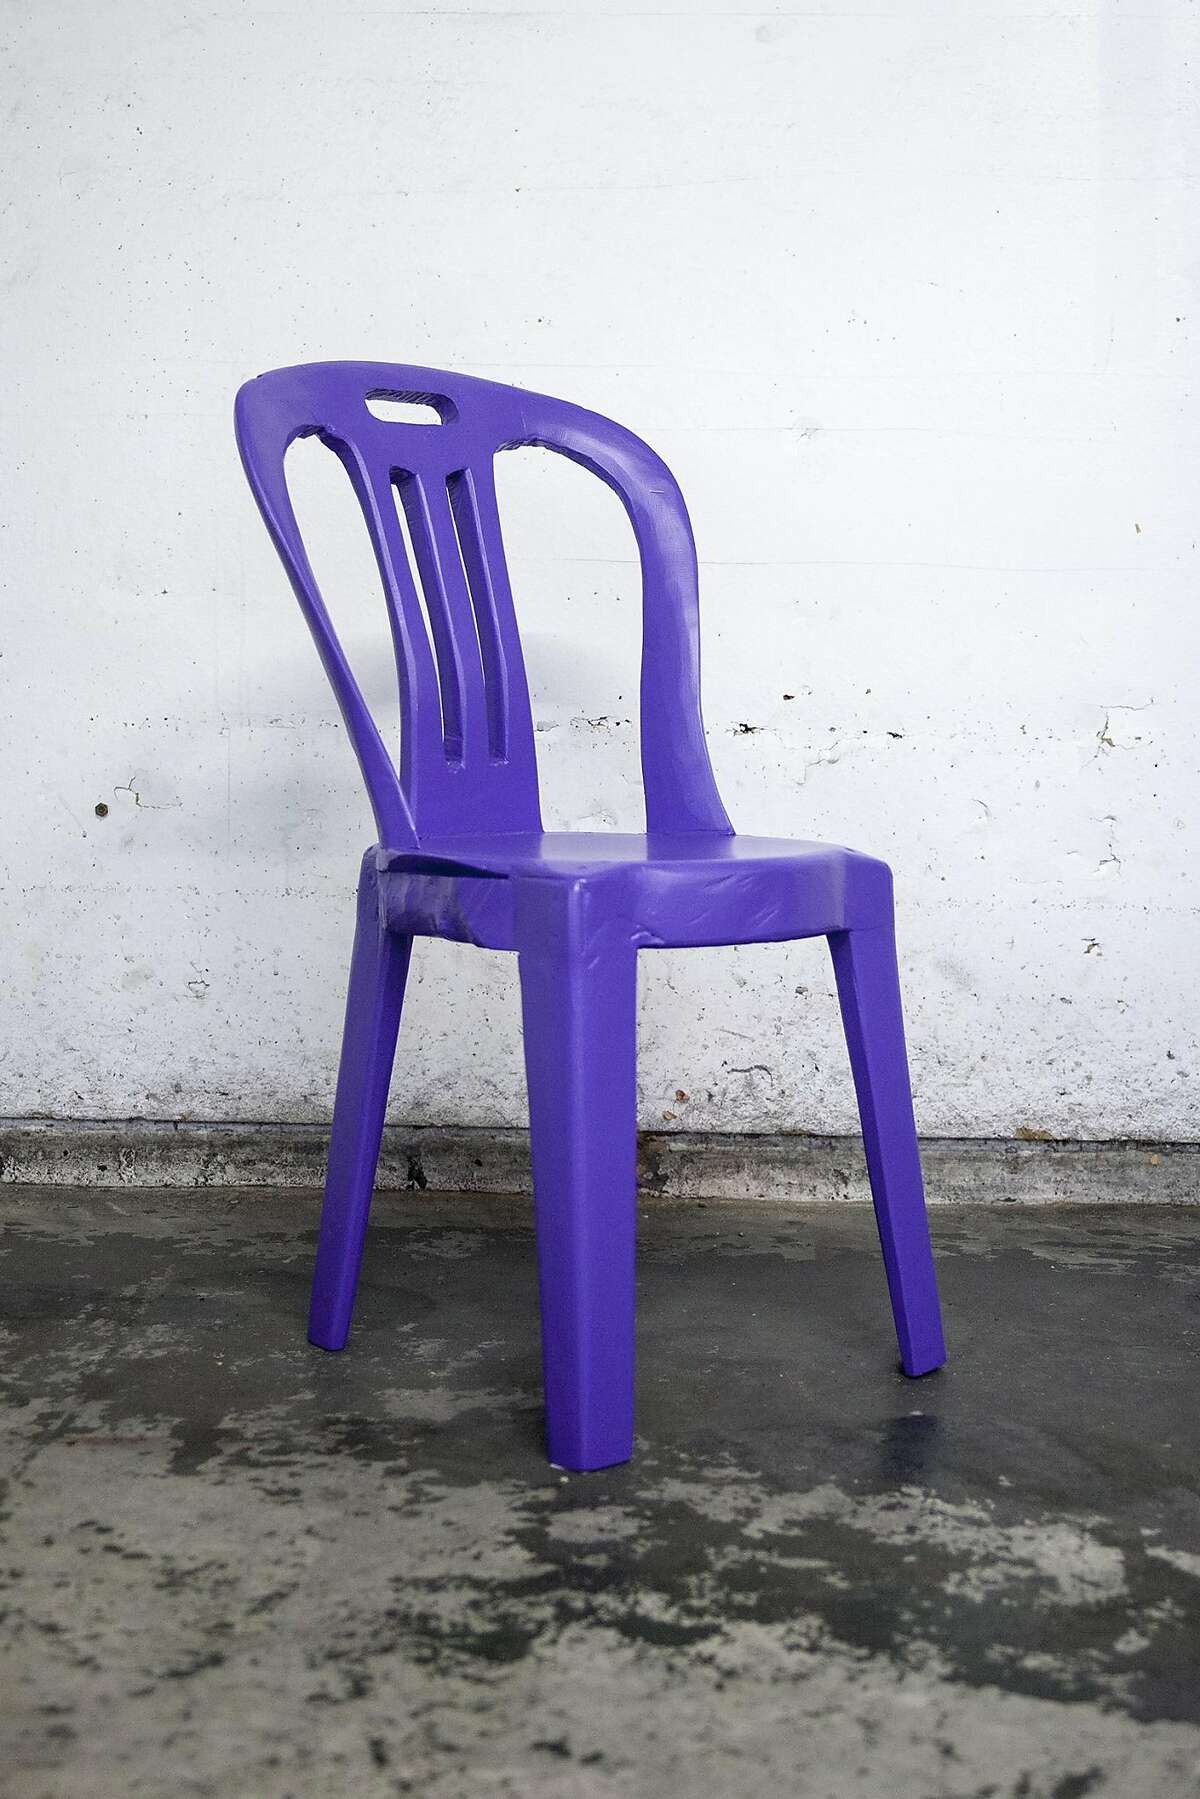 Cameron Platter, "Purple chair I" (2017), carved Jacaranda wood with acrylic paint